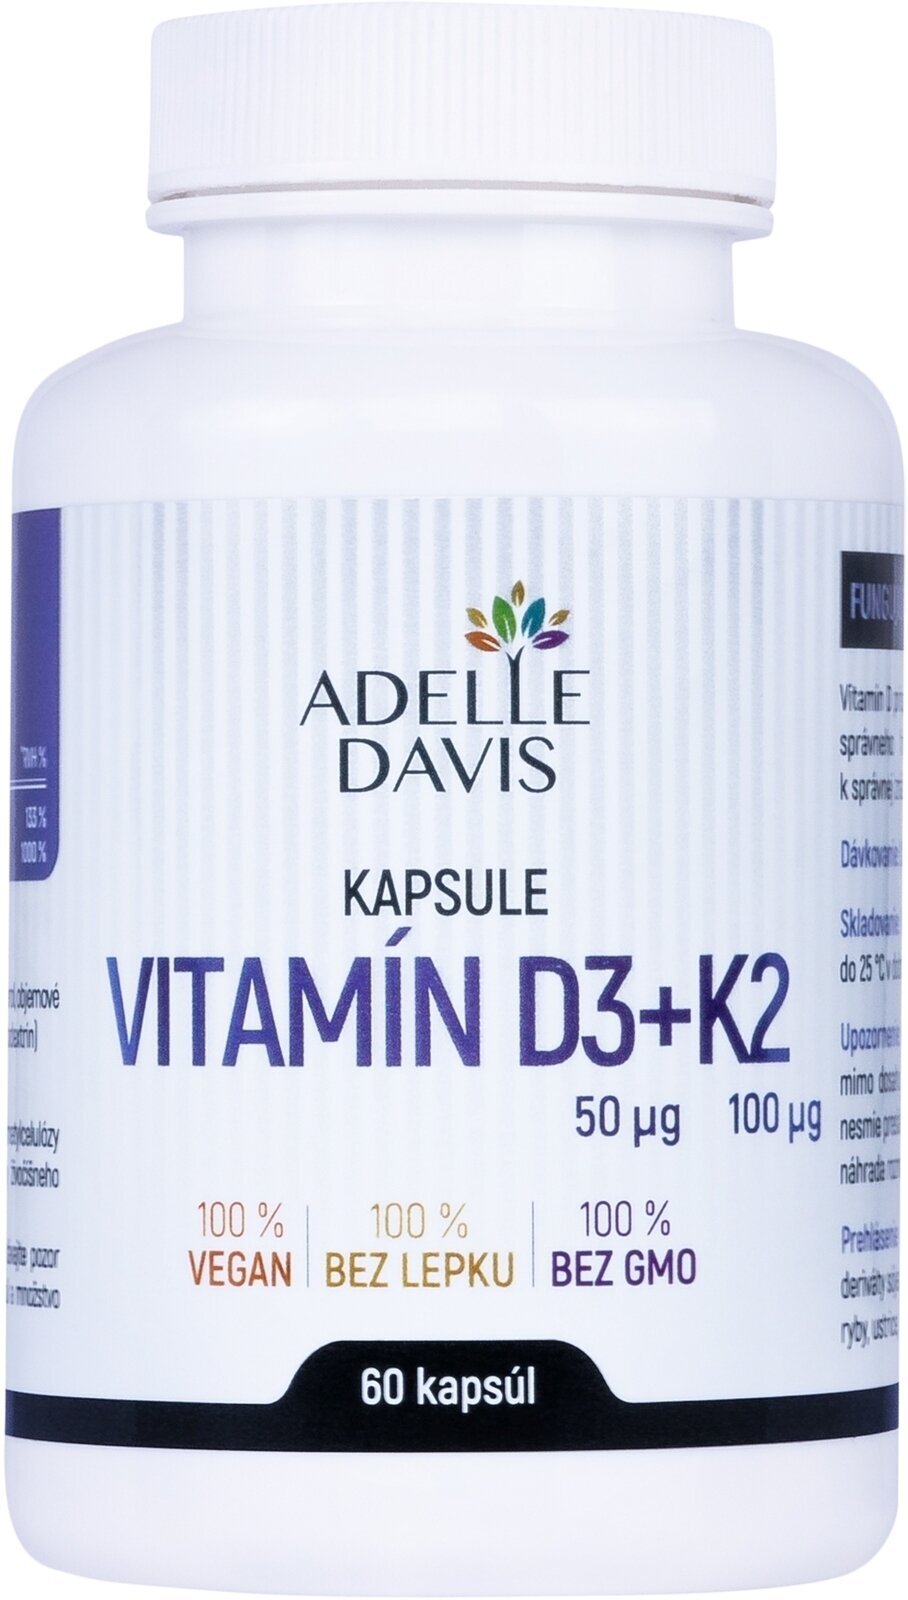 Vitamine D Adelle Davis Vitamin D3 + K2 60 Capsules Vitamine D